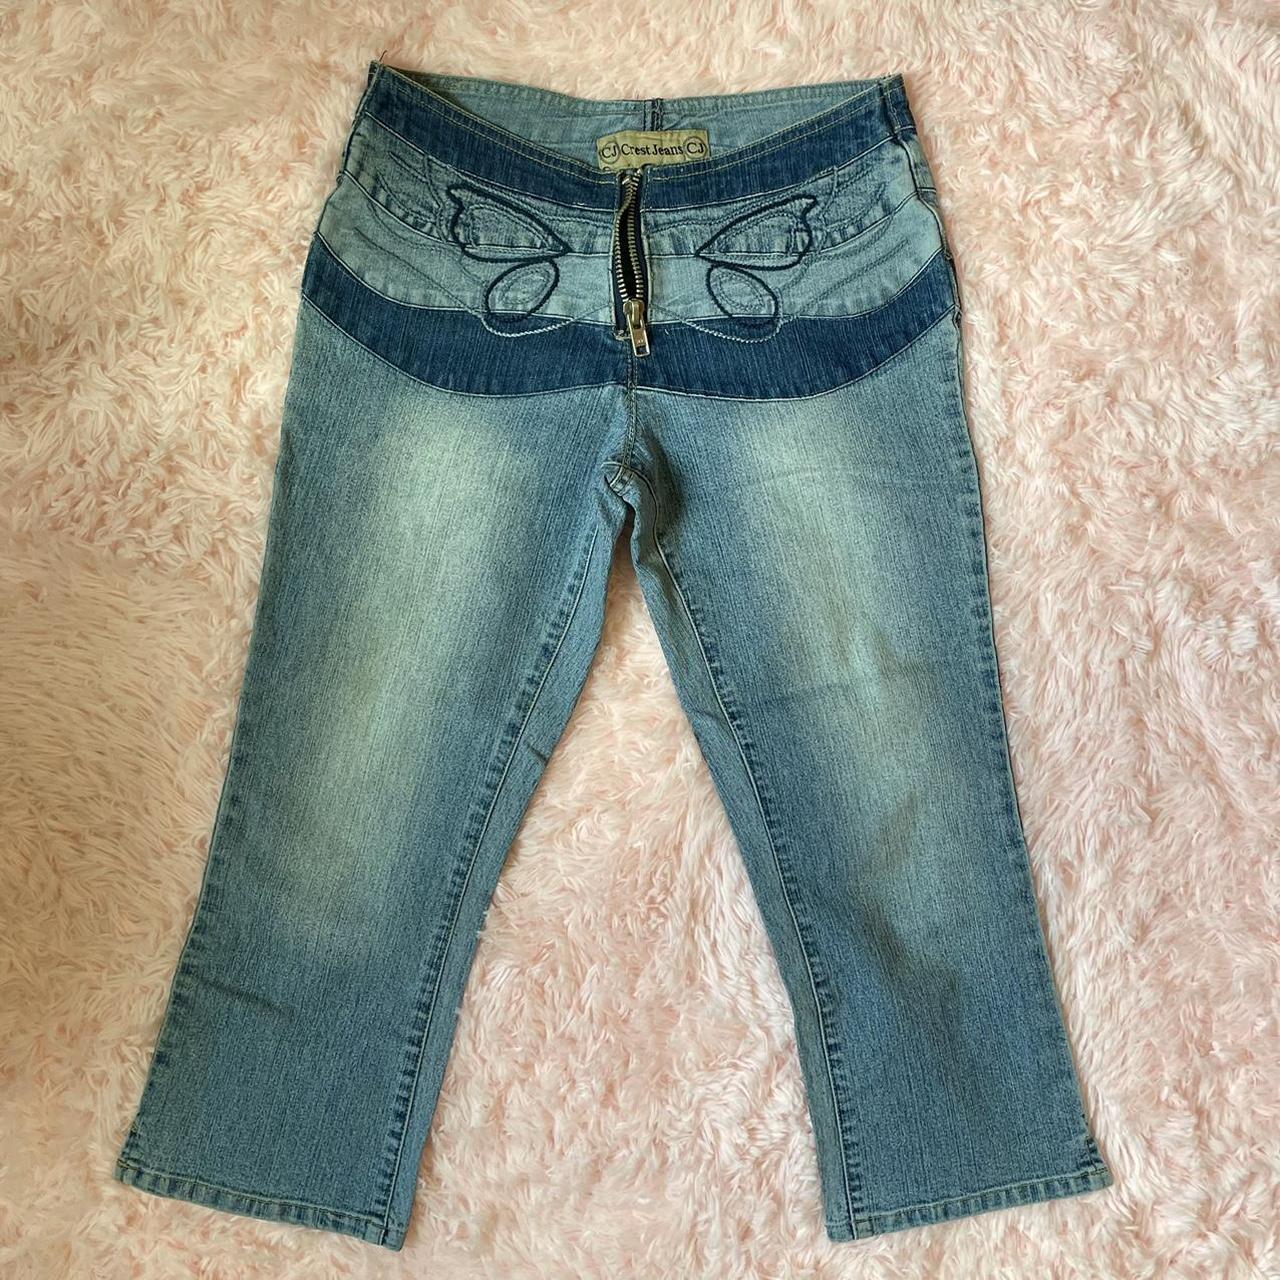 Butterfly Zipper Pants  Vintage jeans, Clothes for women